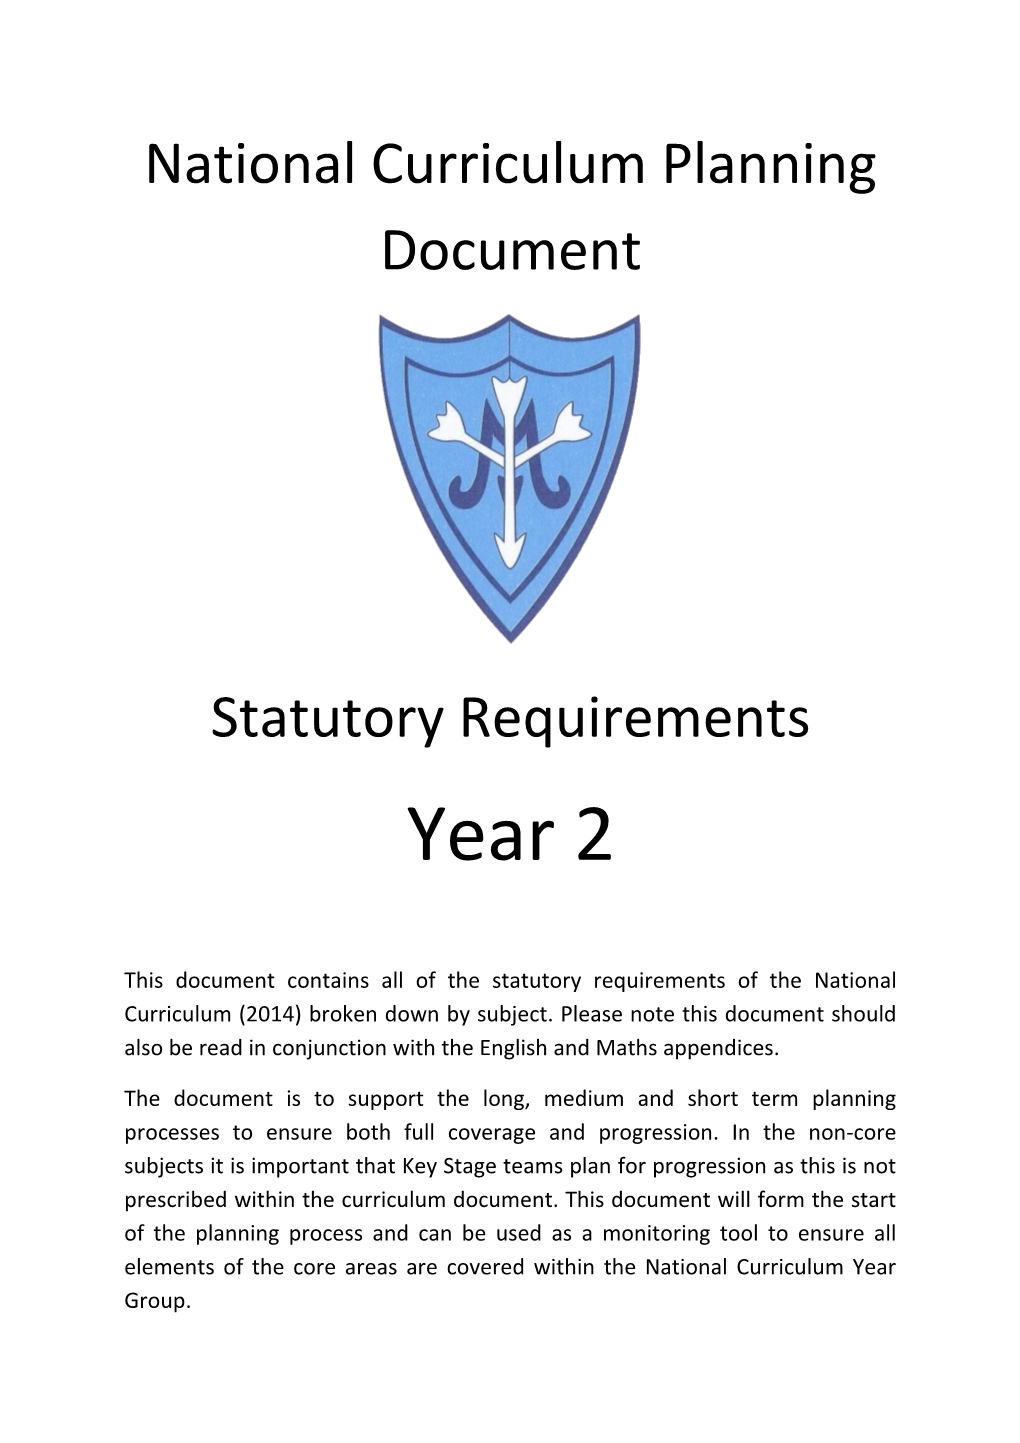 National Curriculum Planning Document